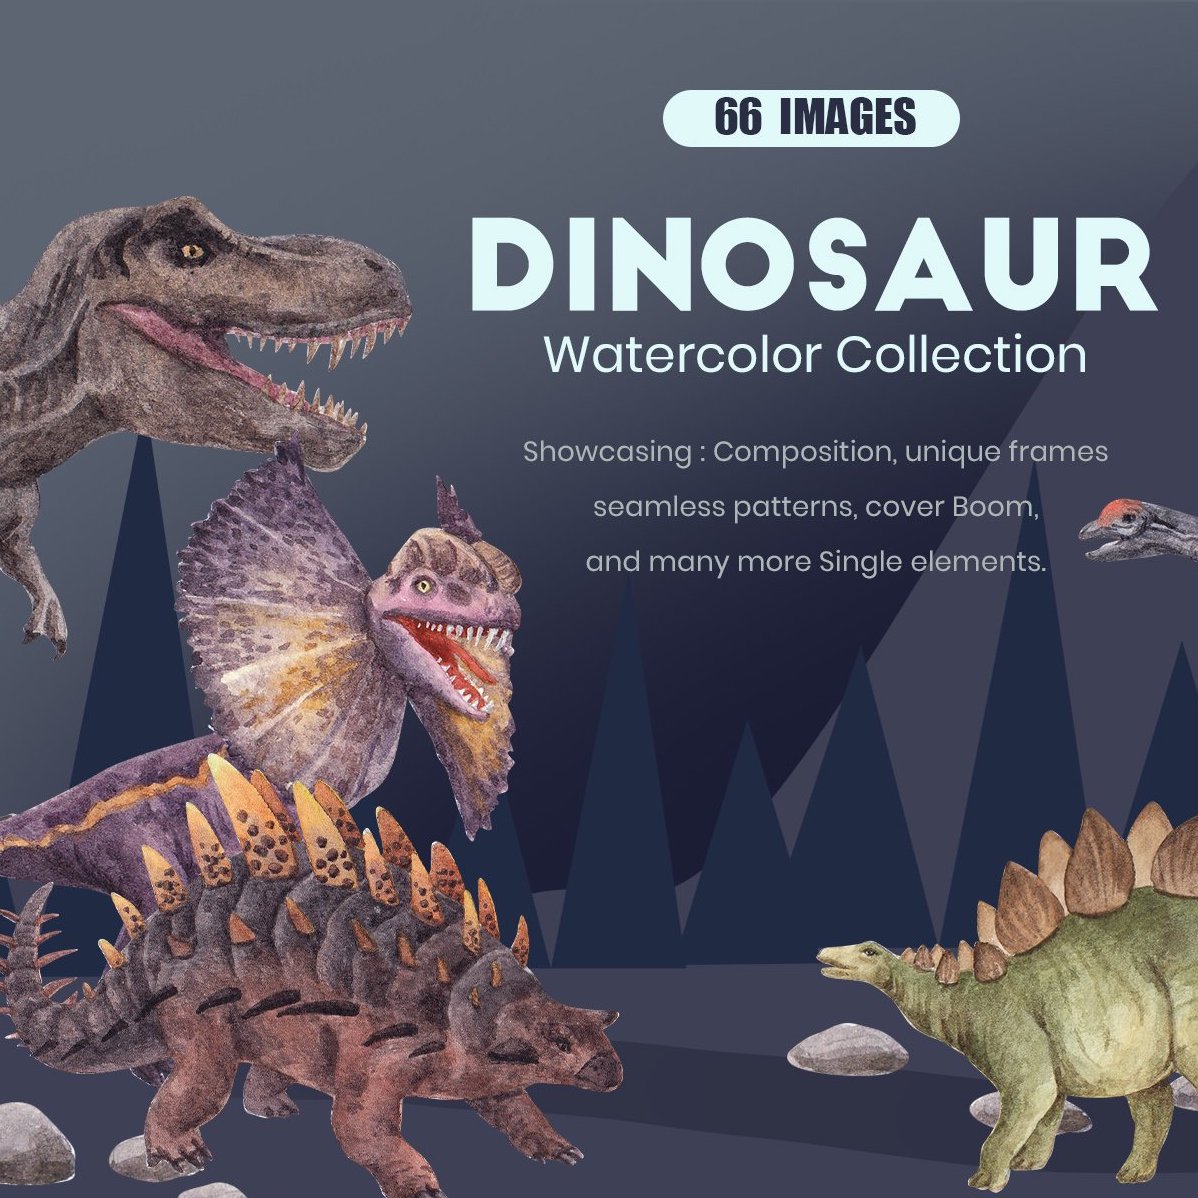 Dinosaur Jurassic World Watercolor cover image.